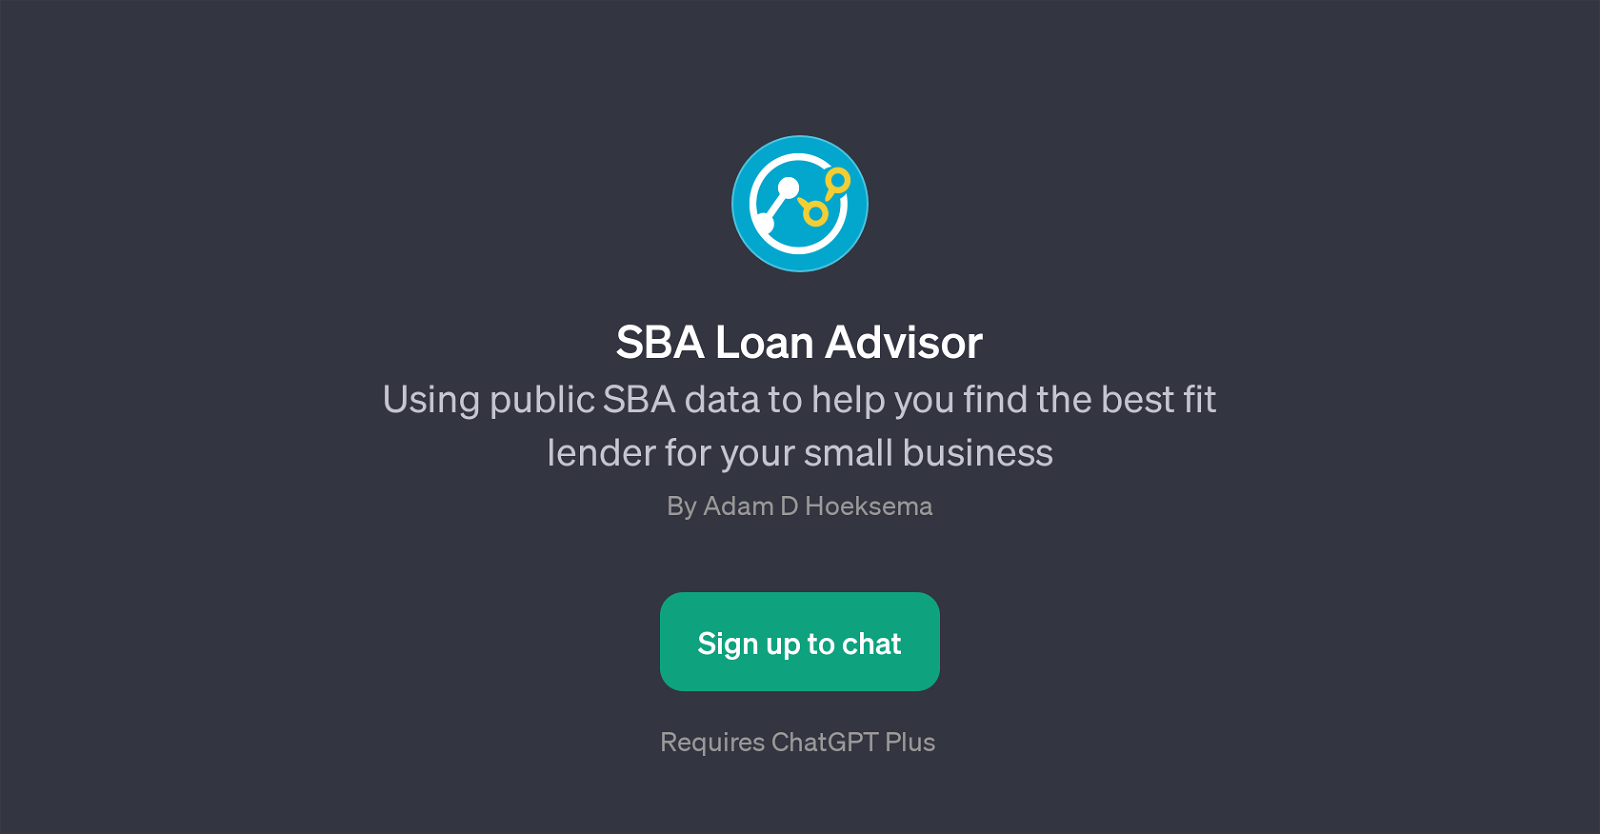 SBA Loan Advisor website